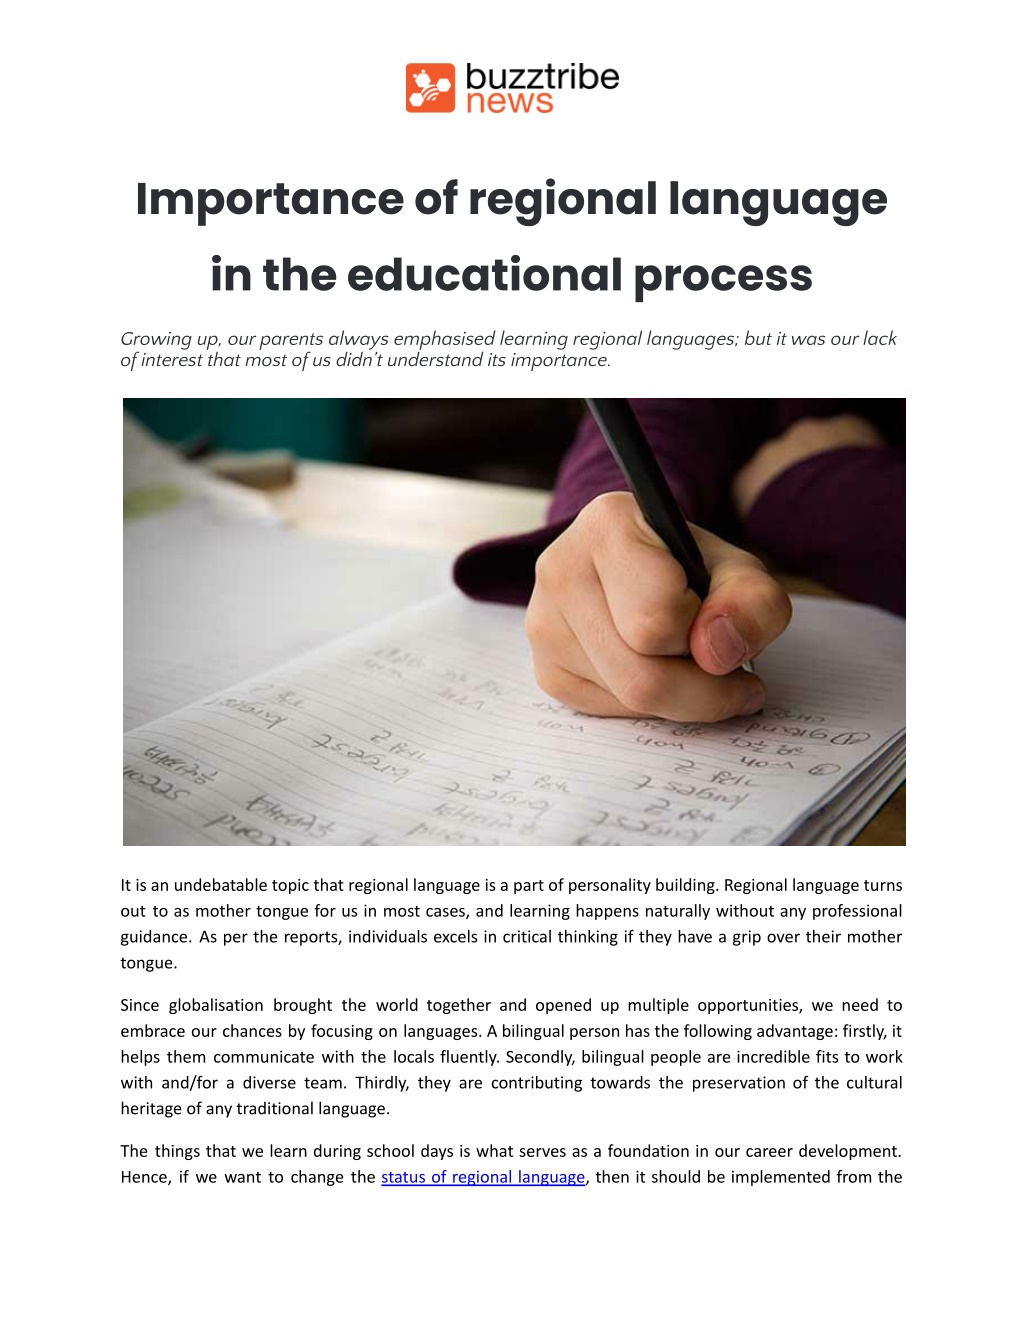 importance of regional language essay